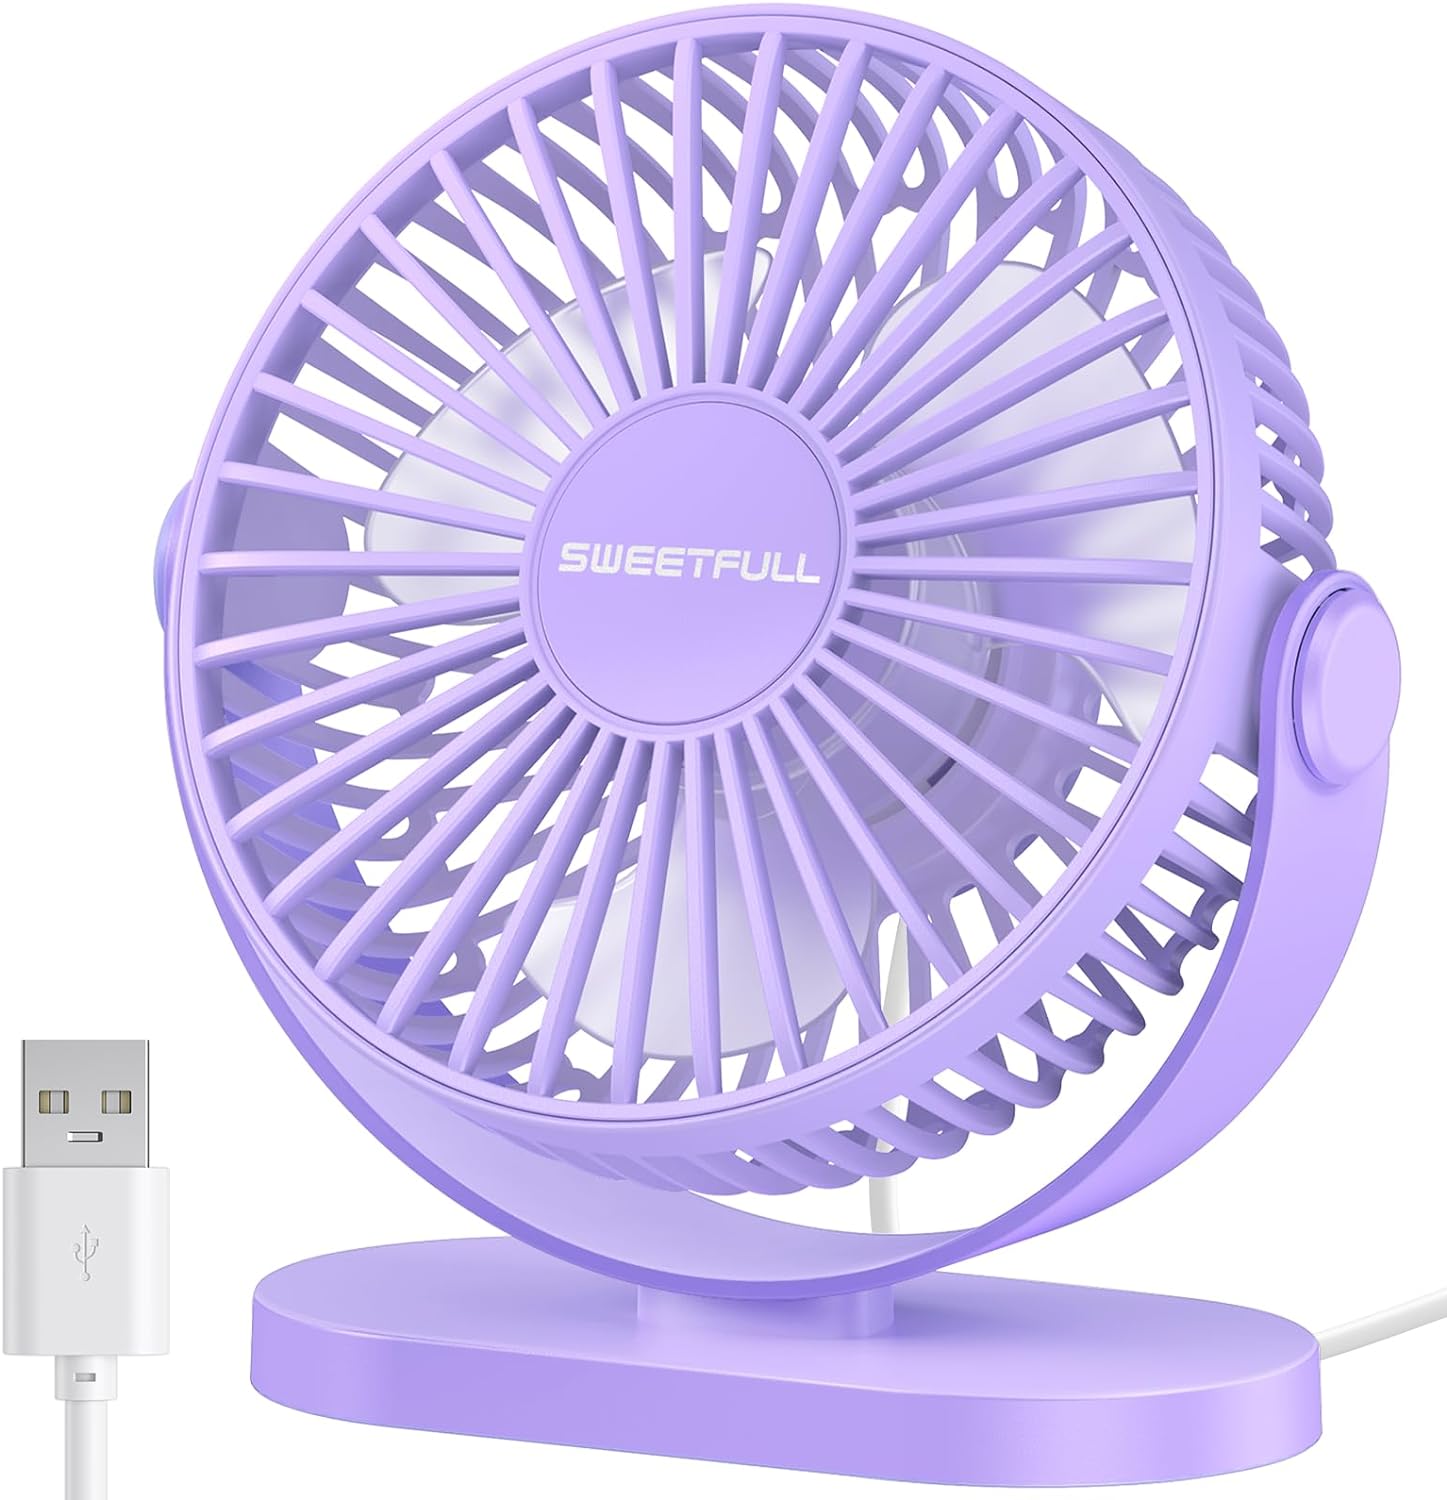 SWEETFULL USB Desk Fan Small Quiet - 3 Speeds Mini Personal Portable Fan 360 Rotation Adjustable, 5 Inch Office Table Cooling Gadgets on Desktop (Purple)